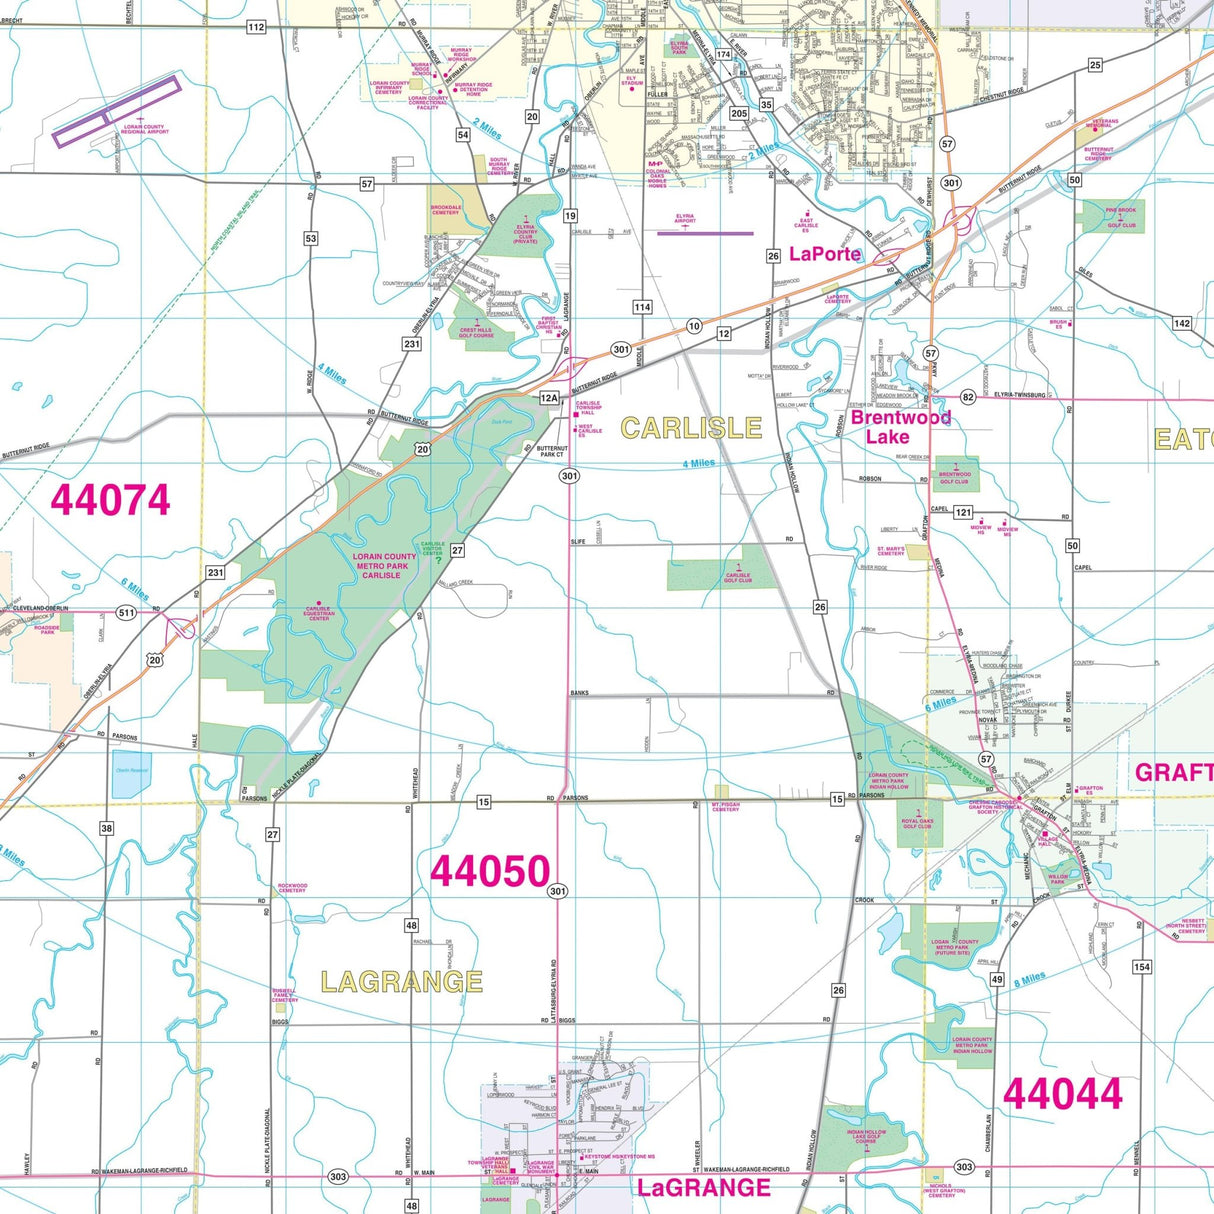 Lorain County, OH Wall Map - KA-C-OH-LORAIN-PAPER - Ultimate Globes